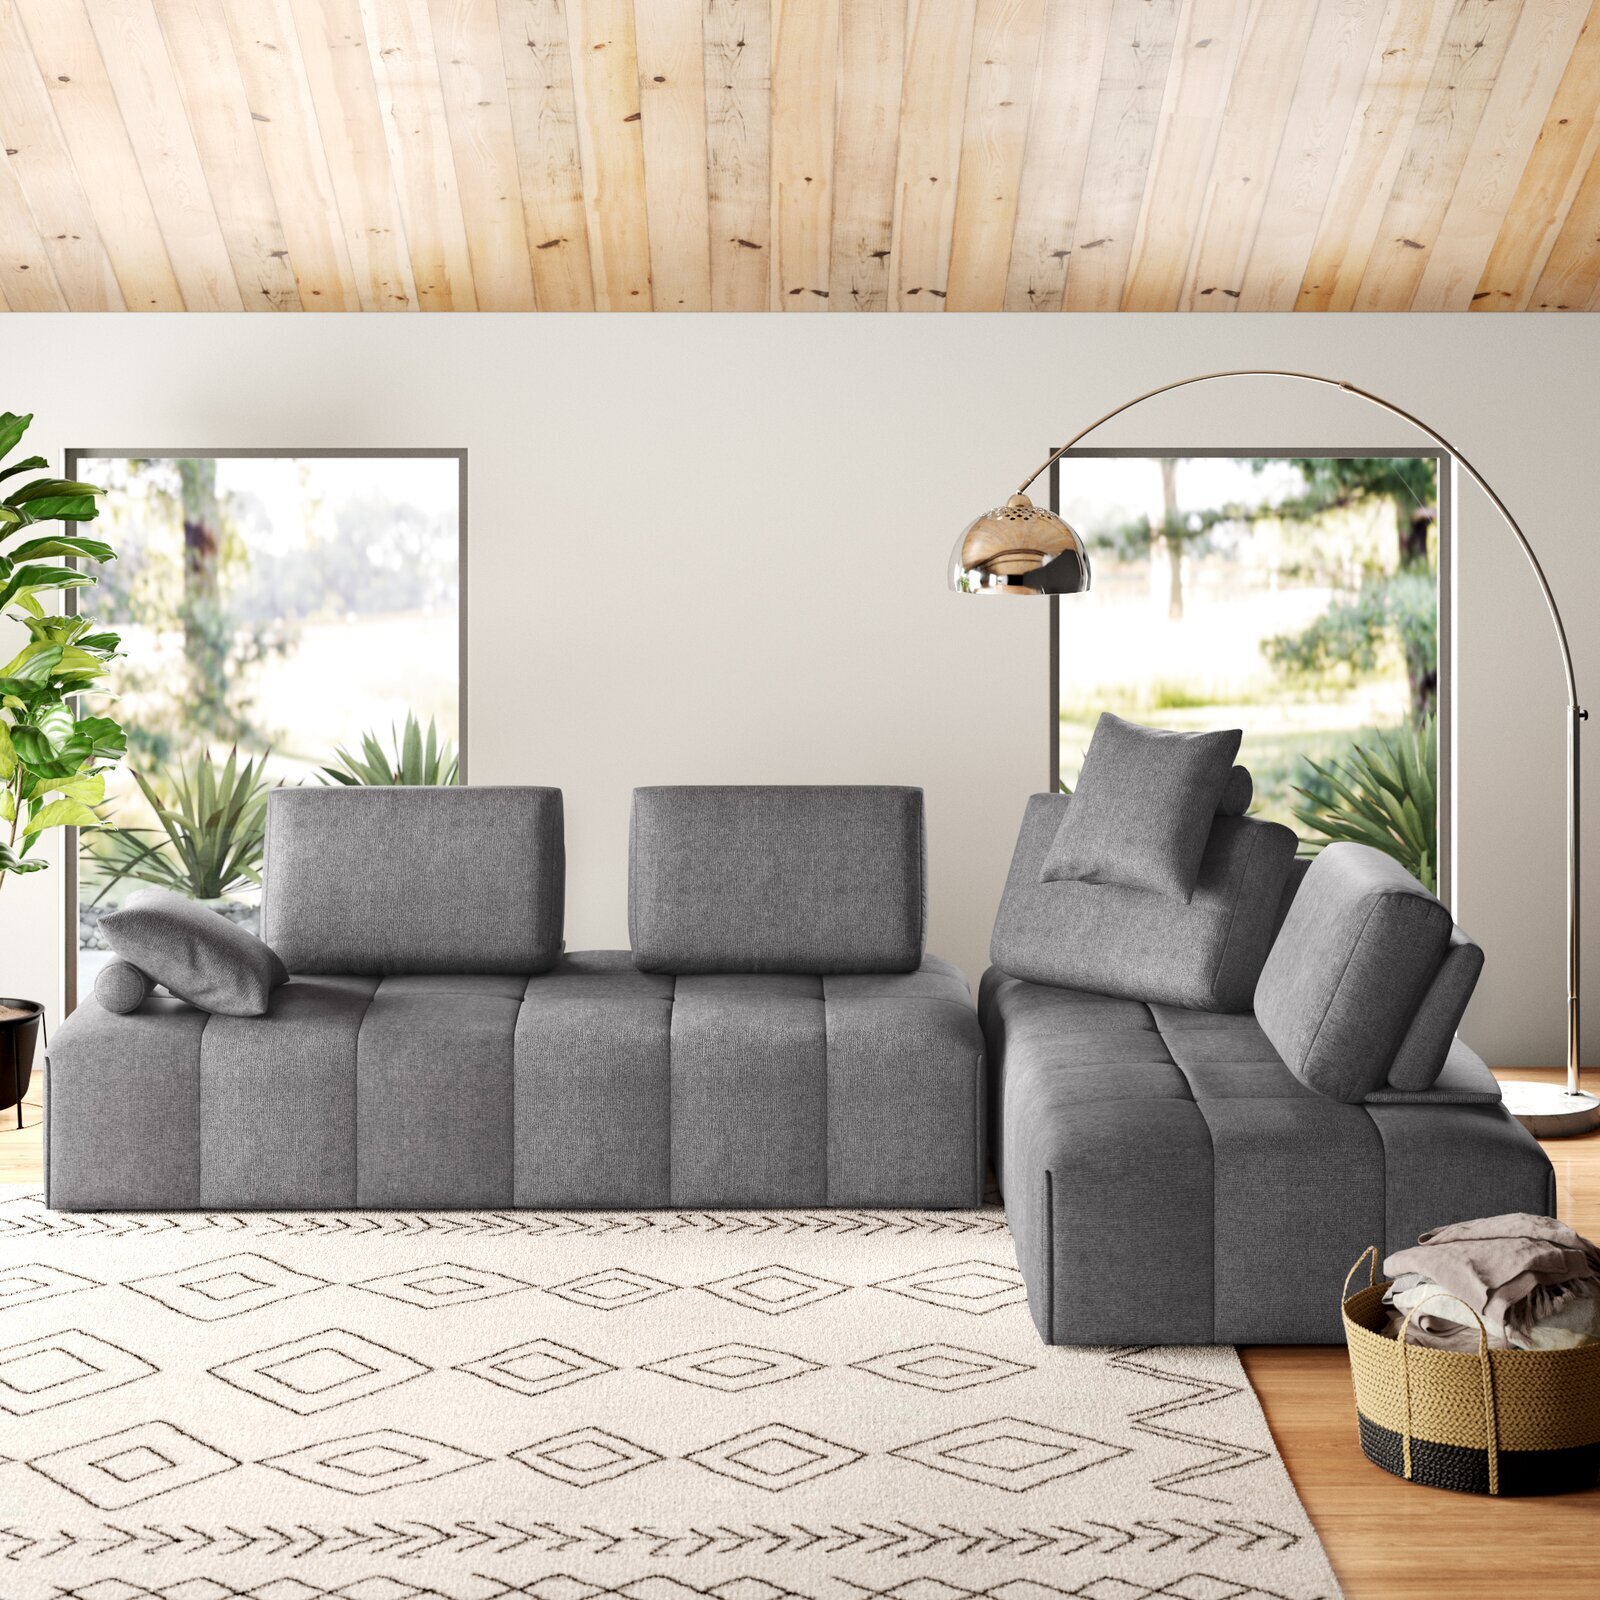 Modular Home Theater Sectional Sofa